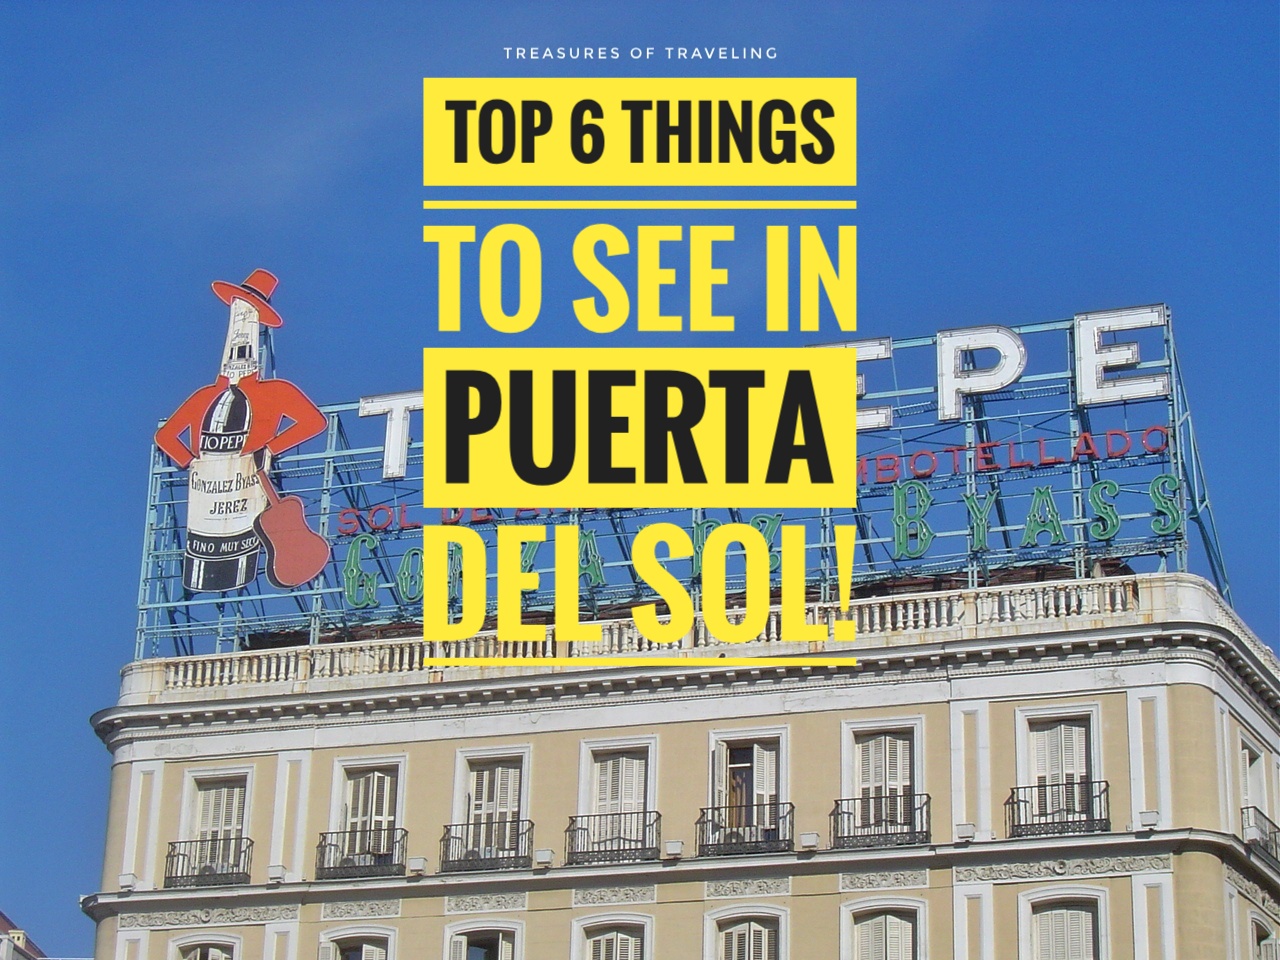 The Top 6 Things To See in Puerta del Sol, Madrid, Spain!